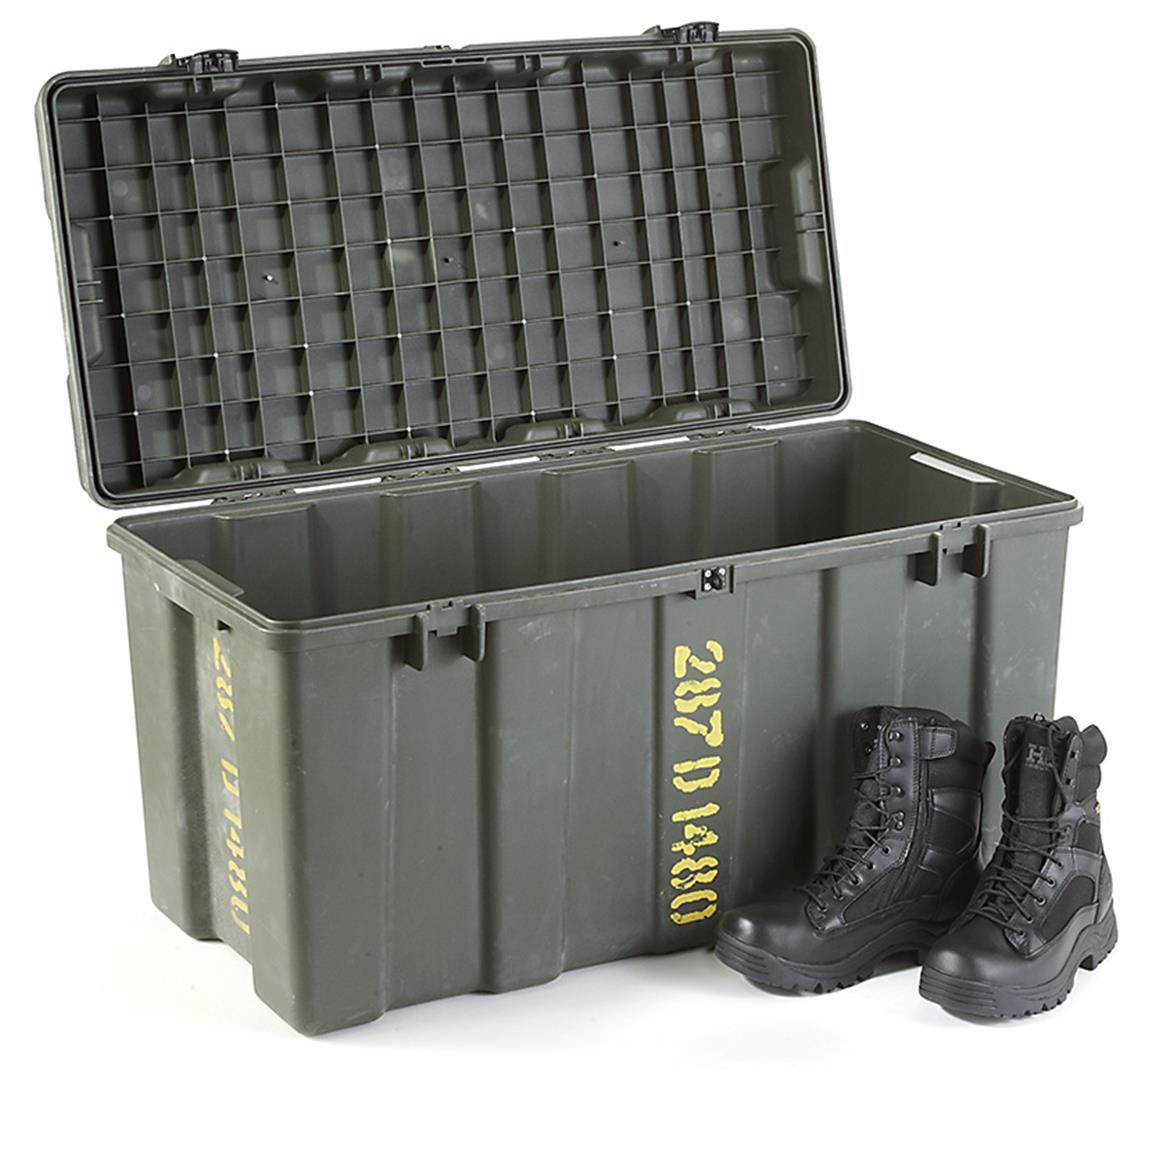 U.S. Military Surplus Hardigg Trunk, Used - 625251, Storage Containers